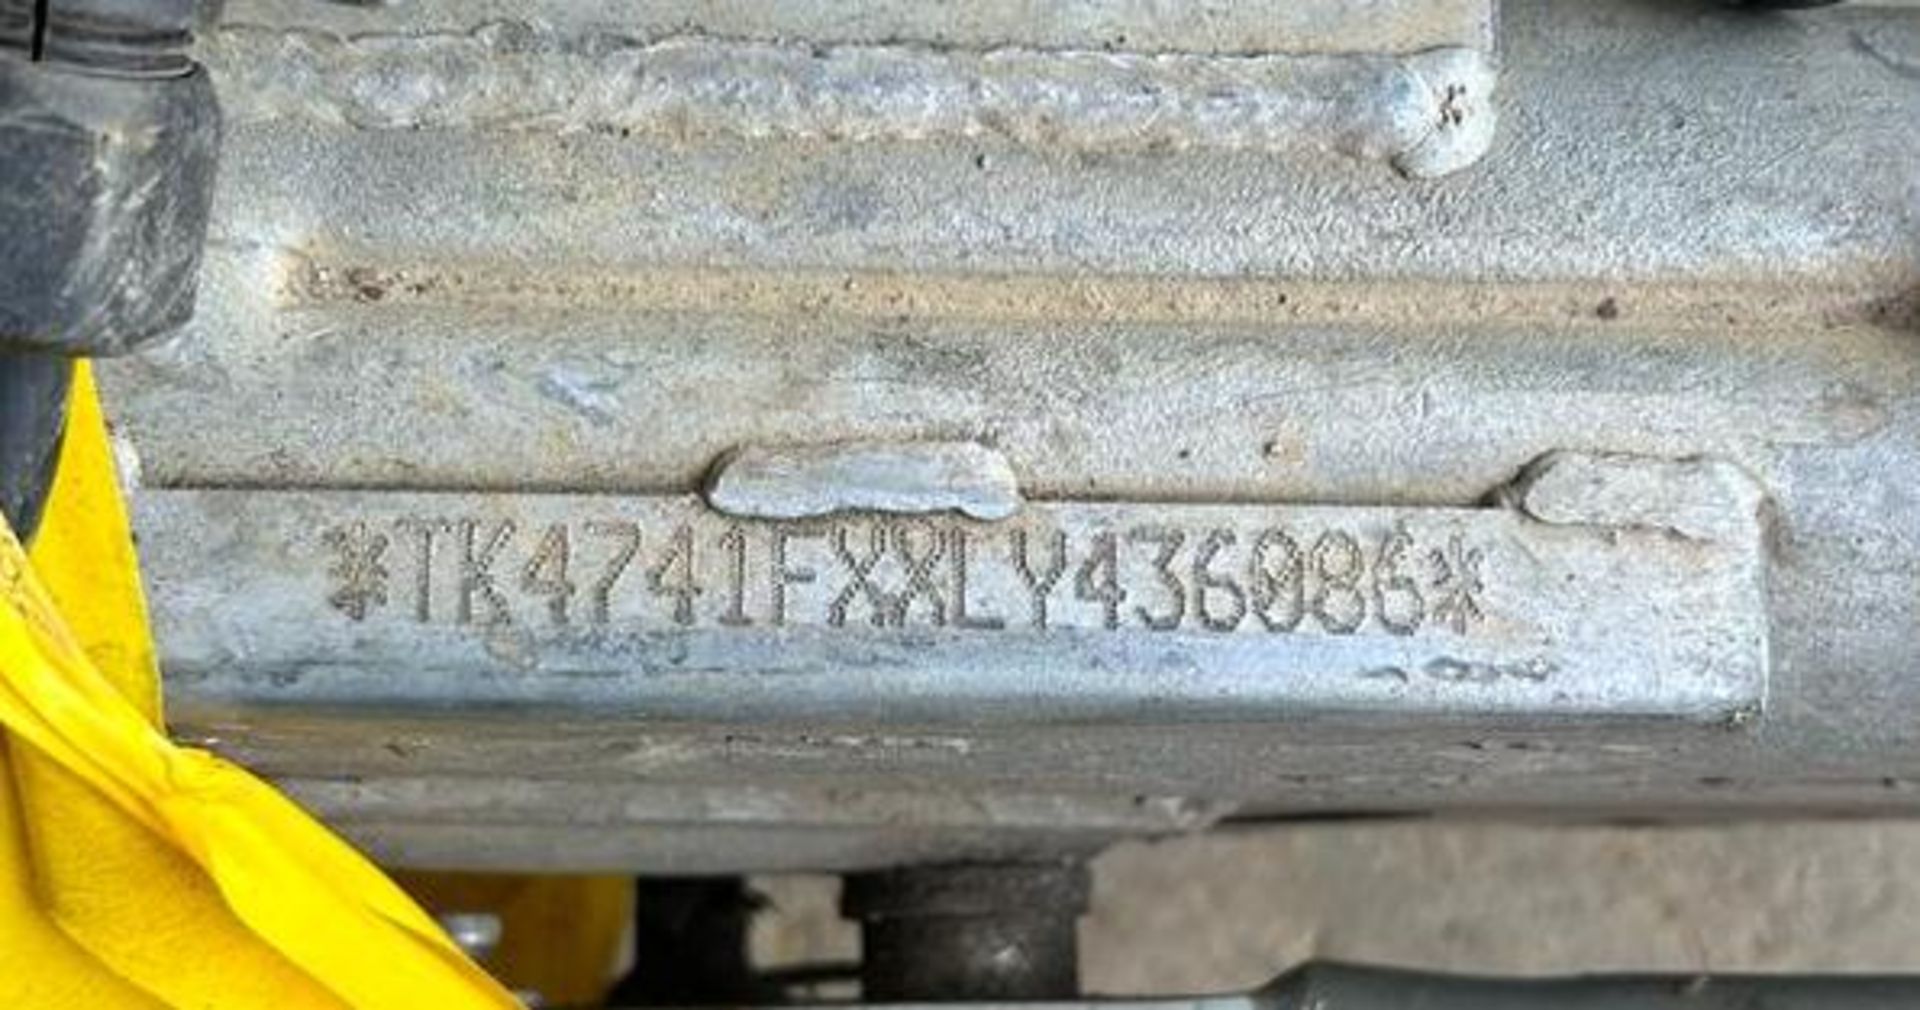 DOOSAN 7-41+ Trailer Mounted Compressor (2020), Serial Number TK4741FXXLY436086, 260 Hours ( - Image 8 of 9